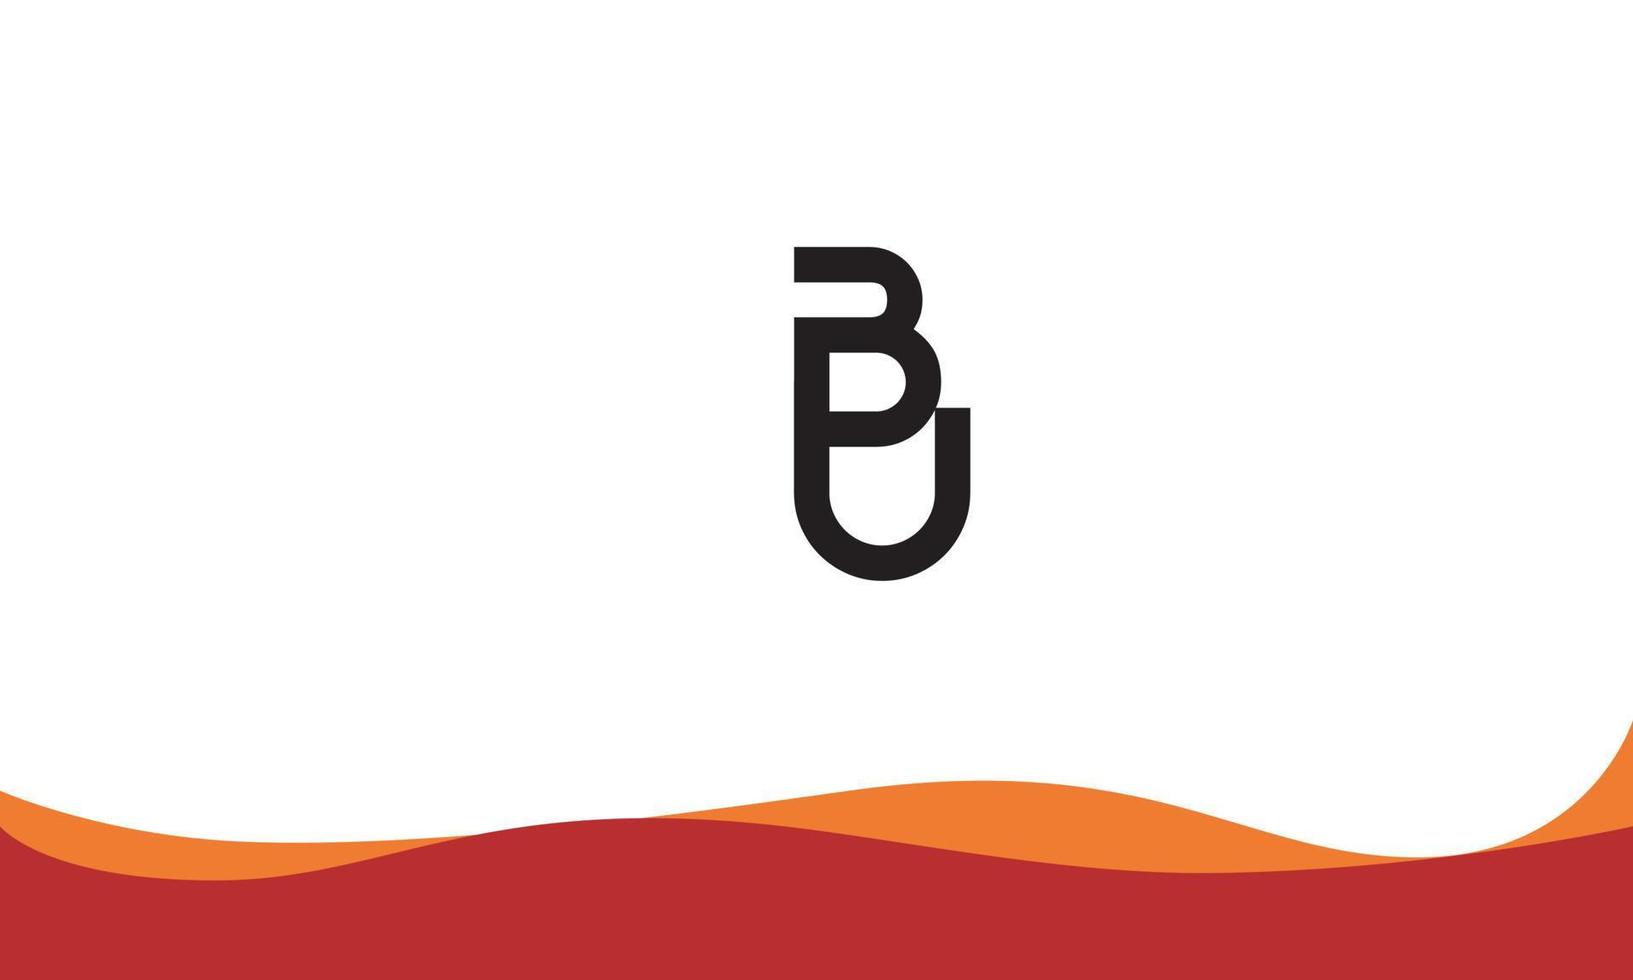 PrintAlphabet letters Initials Monogram logo BU, UB, B and U vector